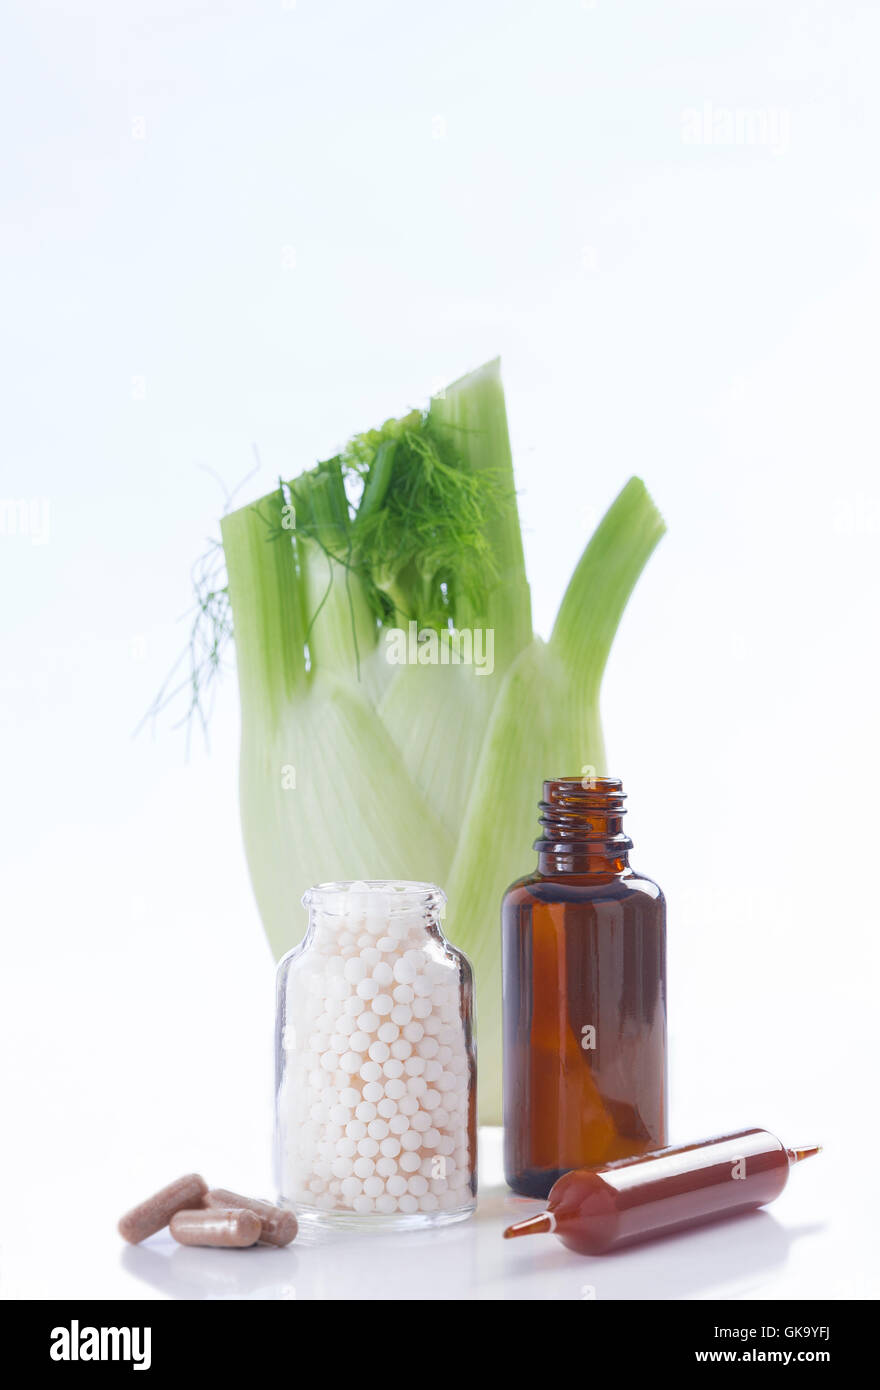 fennel plant healing herbal medicine Stock Photo